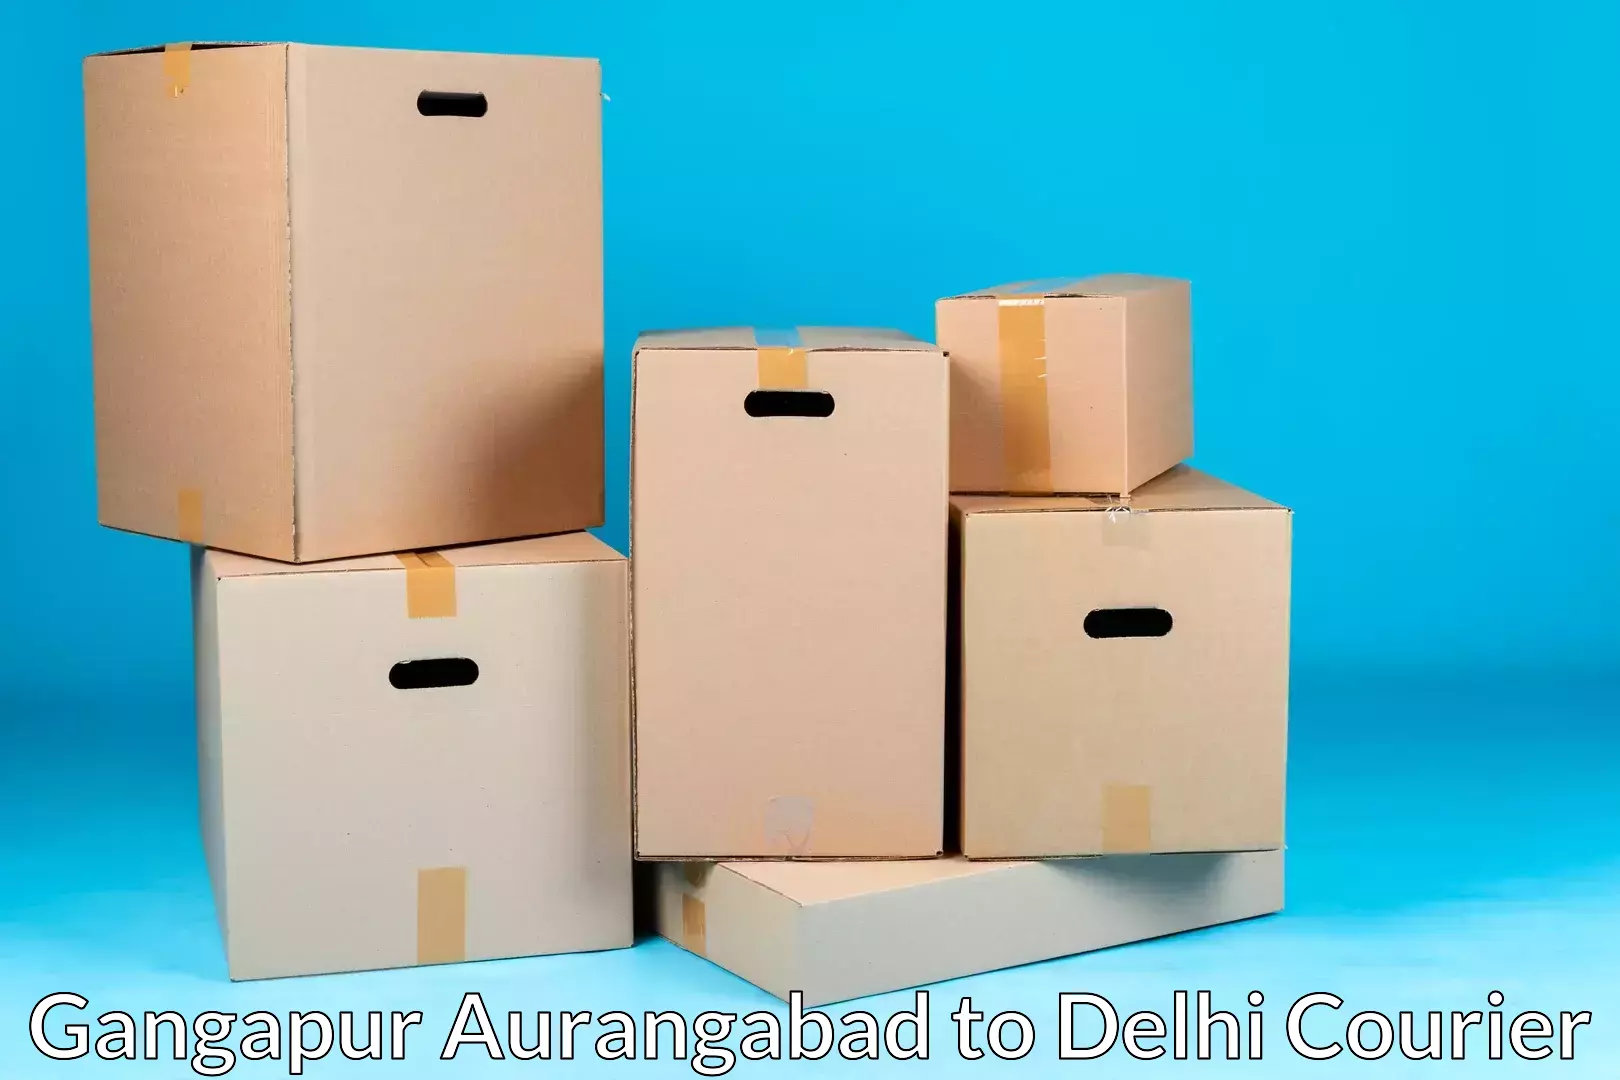 Home goods moving company Gangapur Aurangabad to Delhi